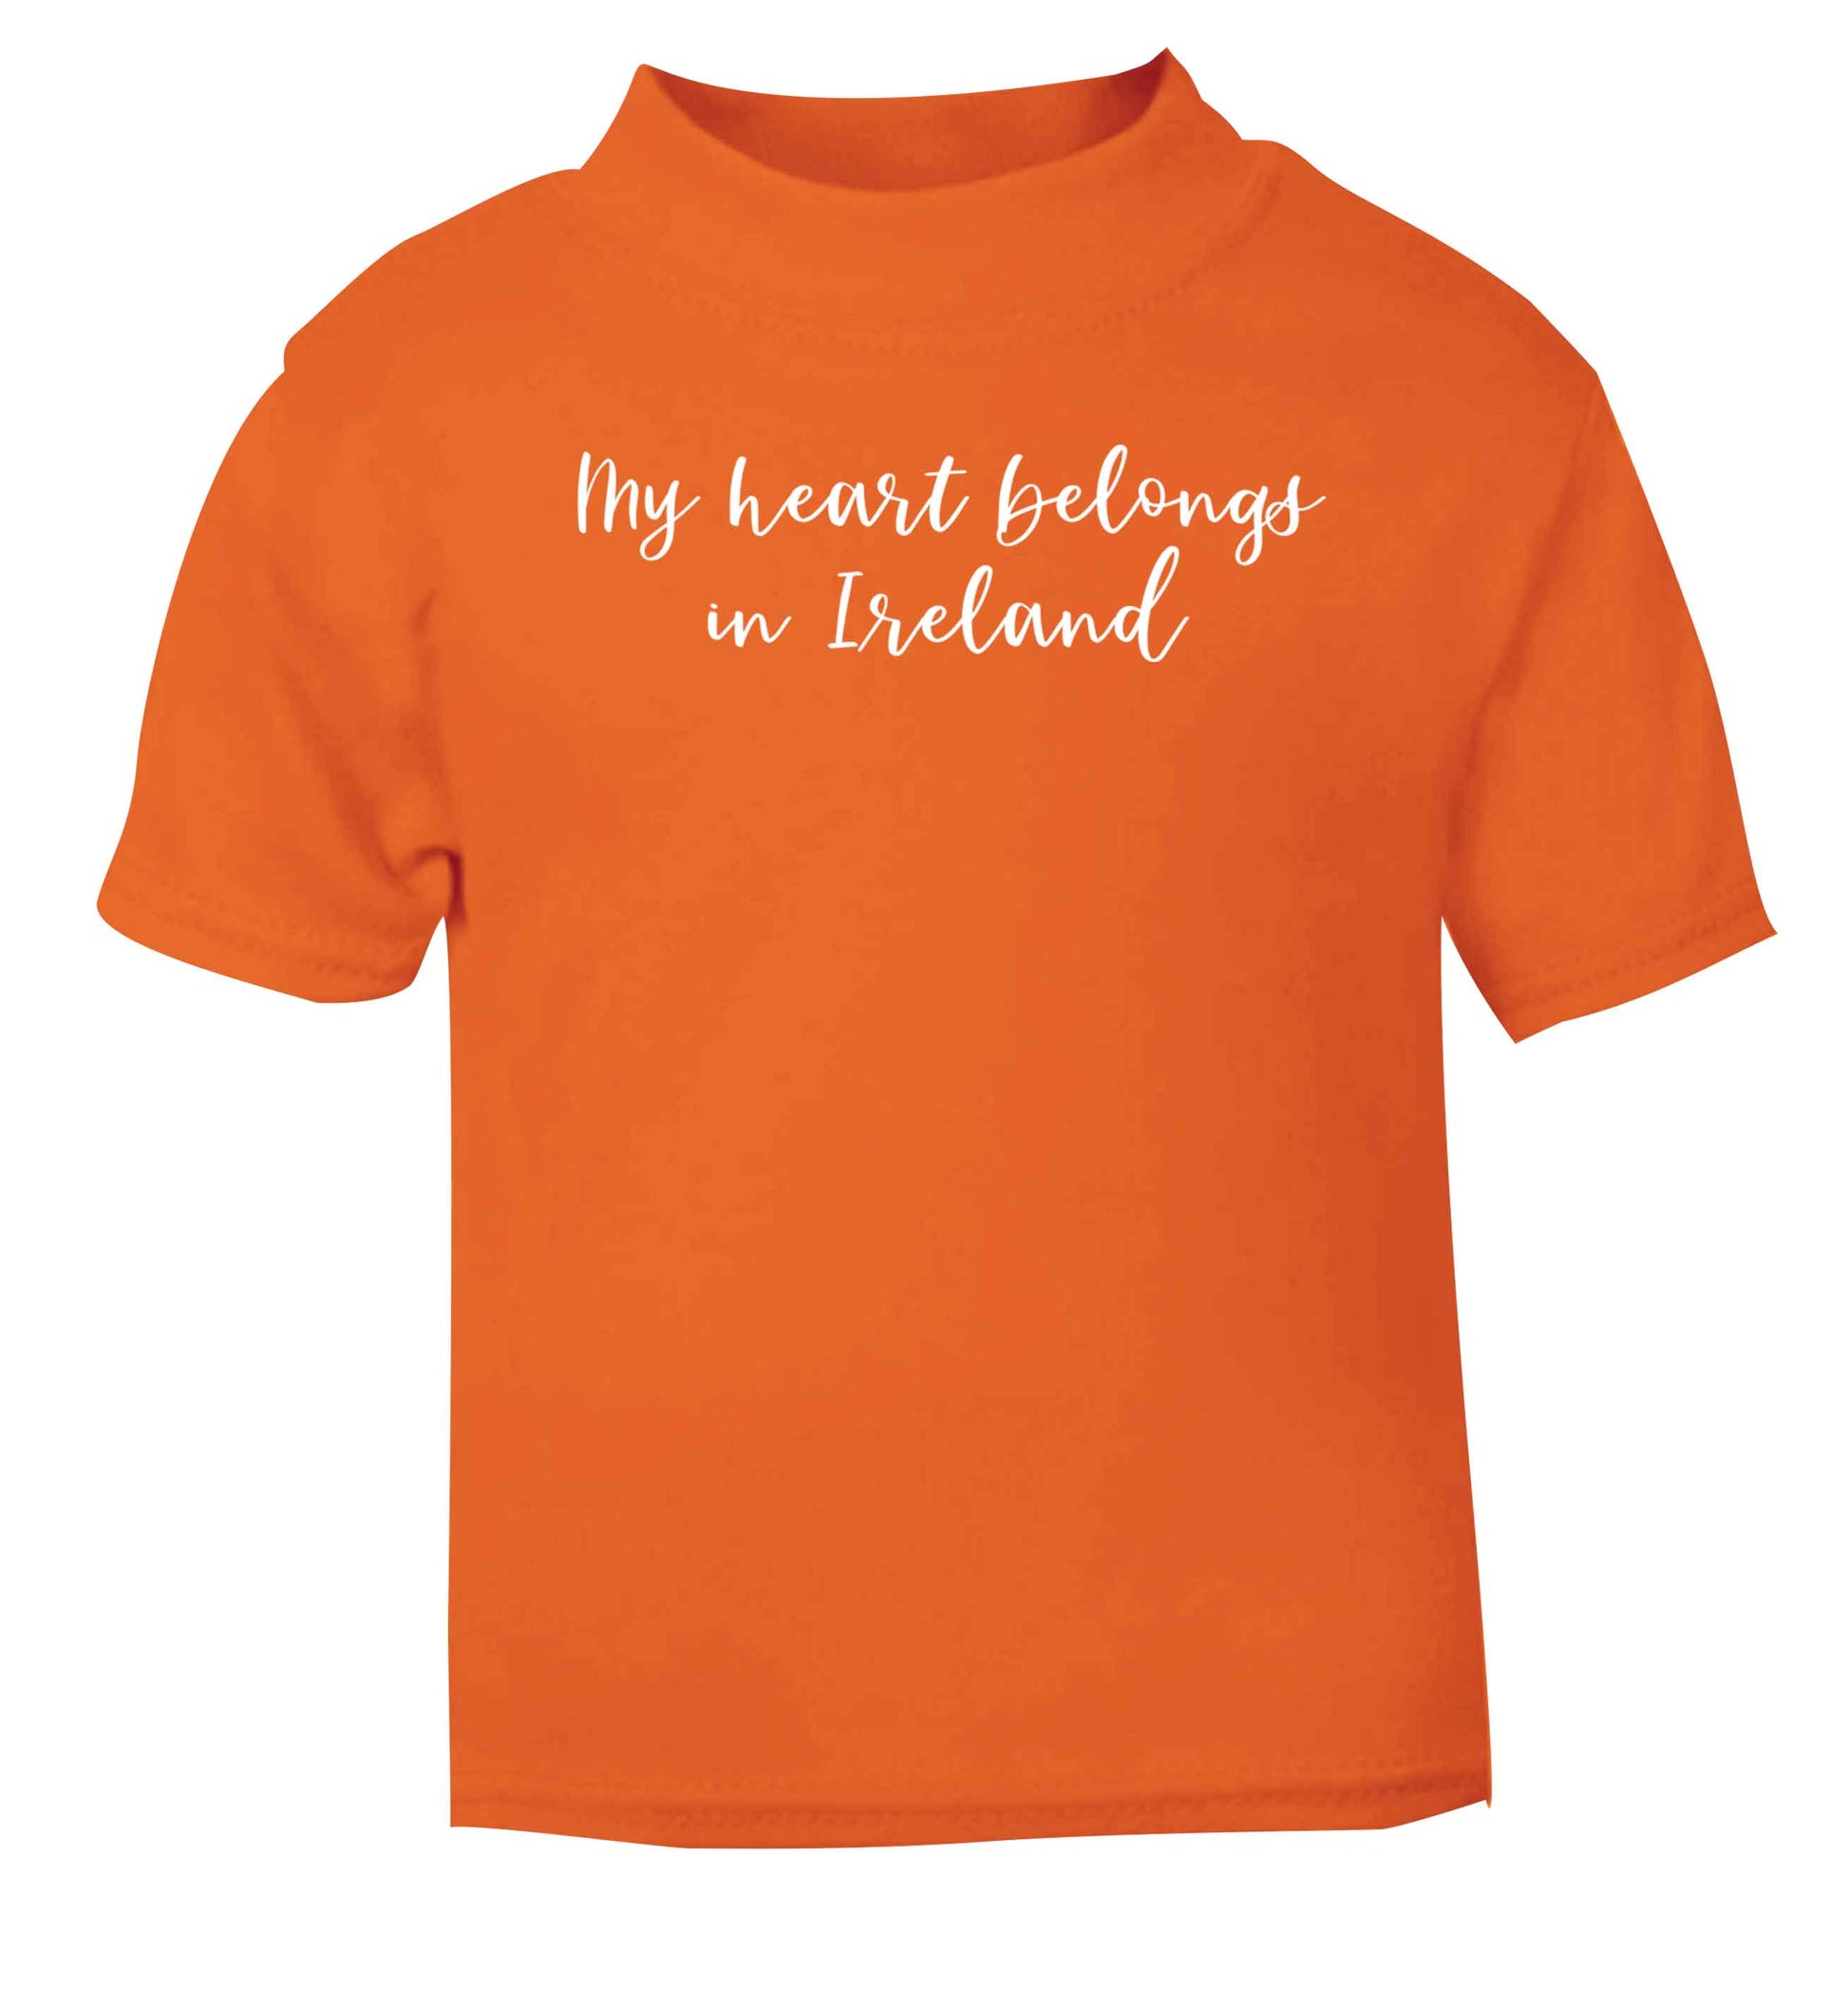 My heart belongs in Ireland orange baby toddler Tshirt 2 Years